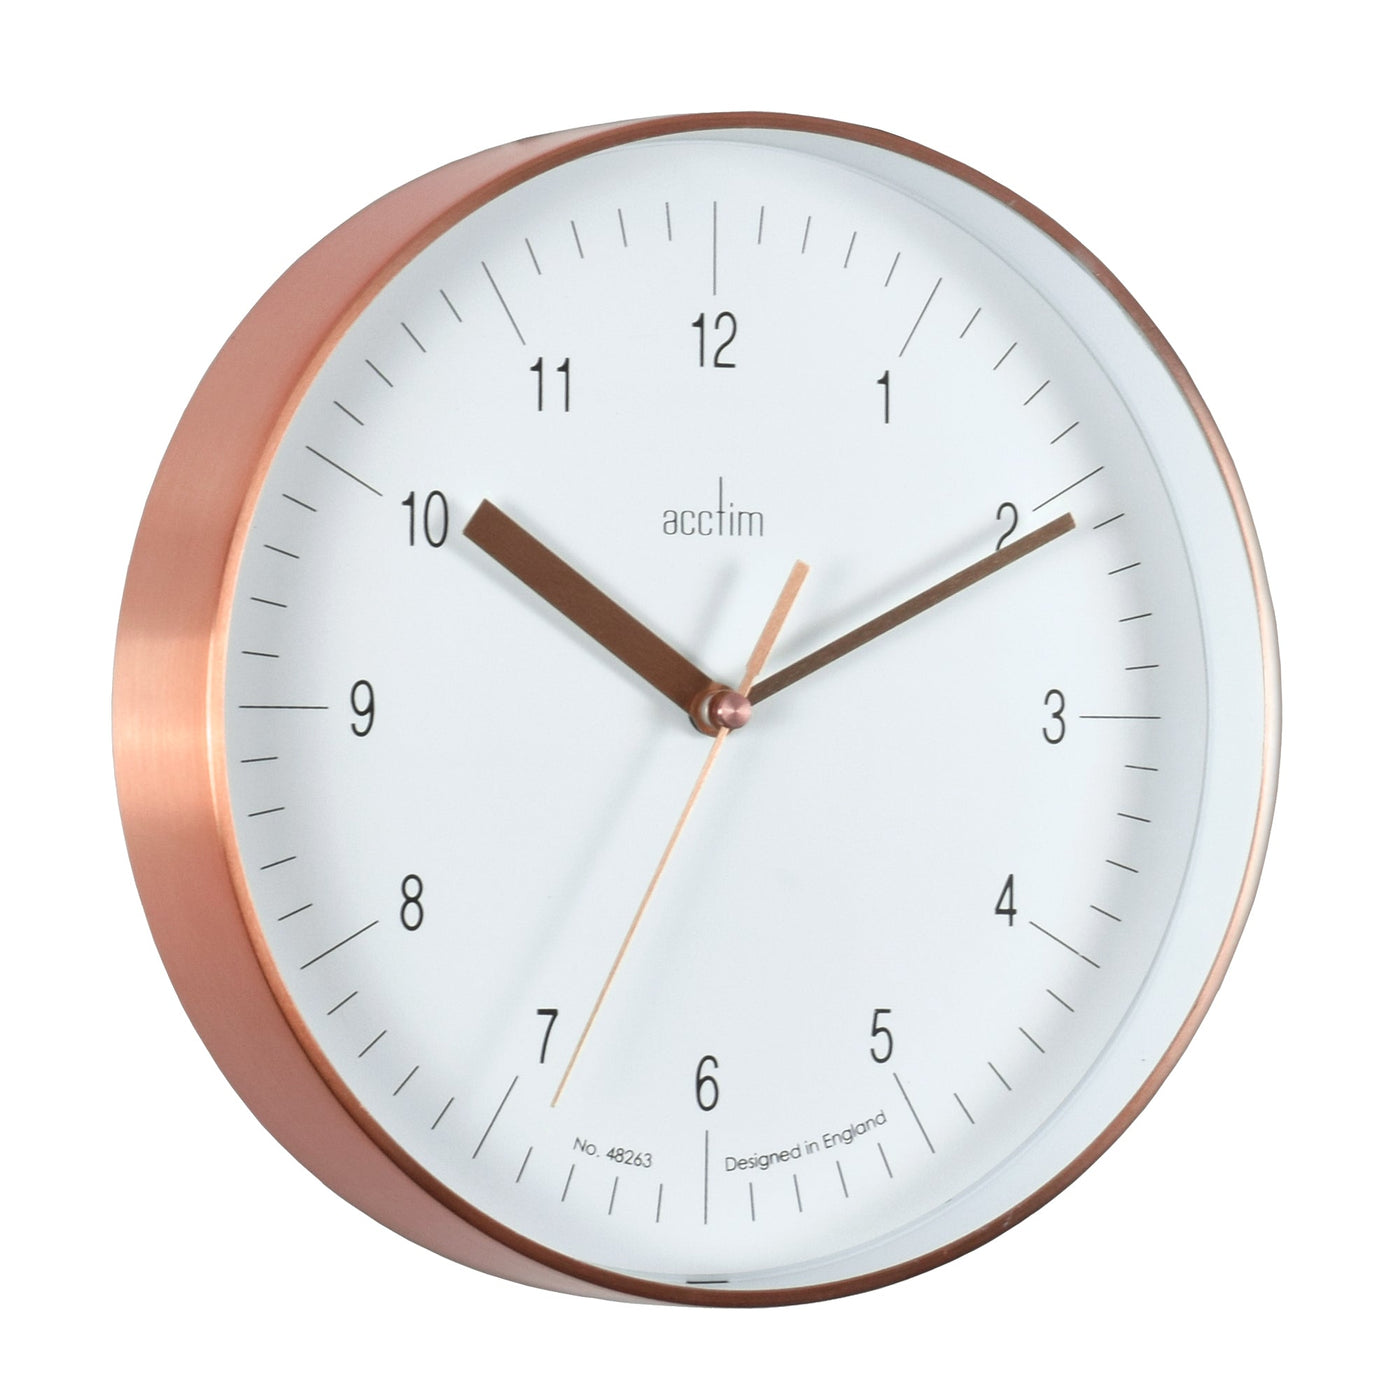 Acctim Colt Wall Clock Copper White Dial - timeframedclocks